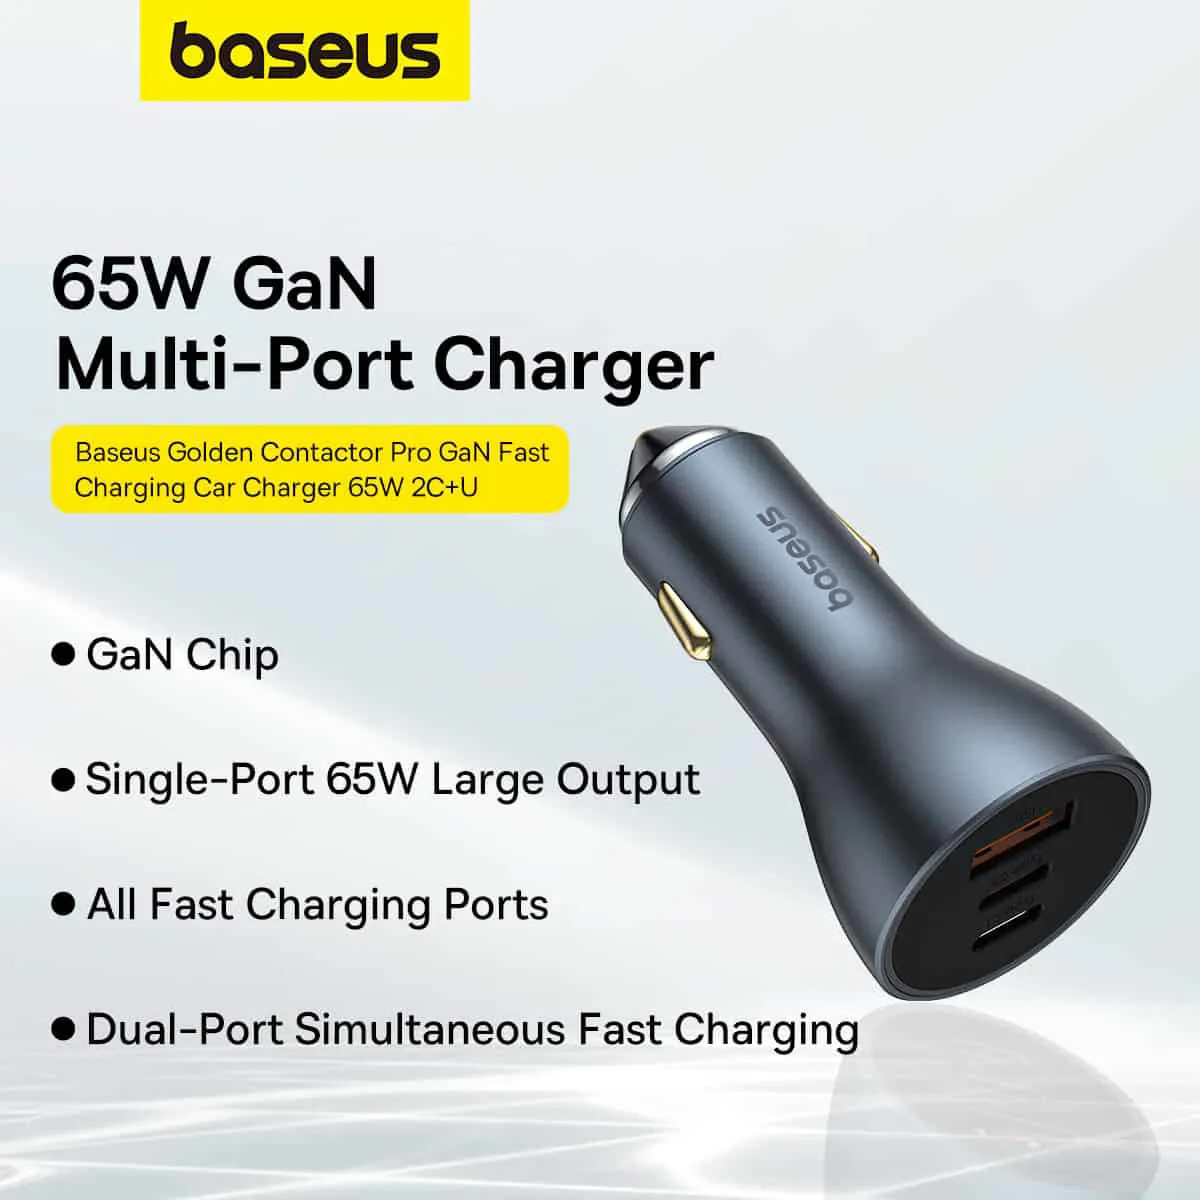 baseus golden contactor pro gan fast charging car charger u 2c 65w c00035202841 00 08